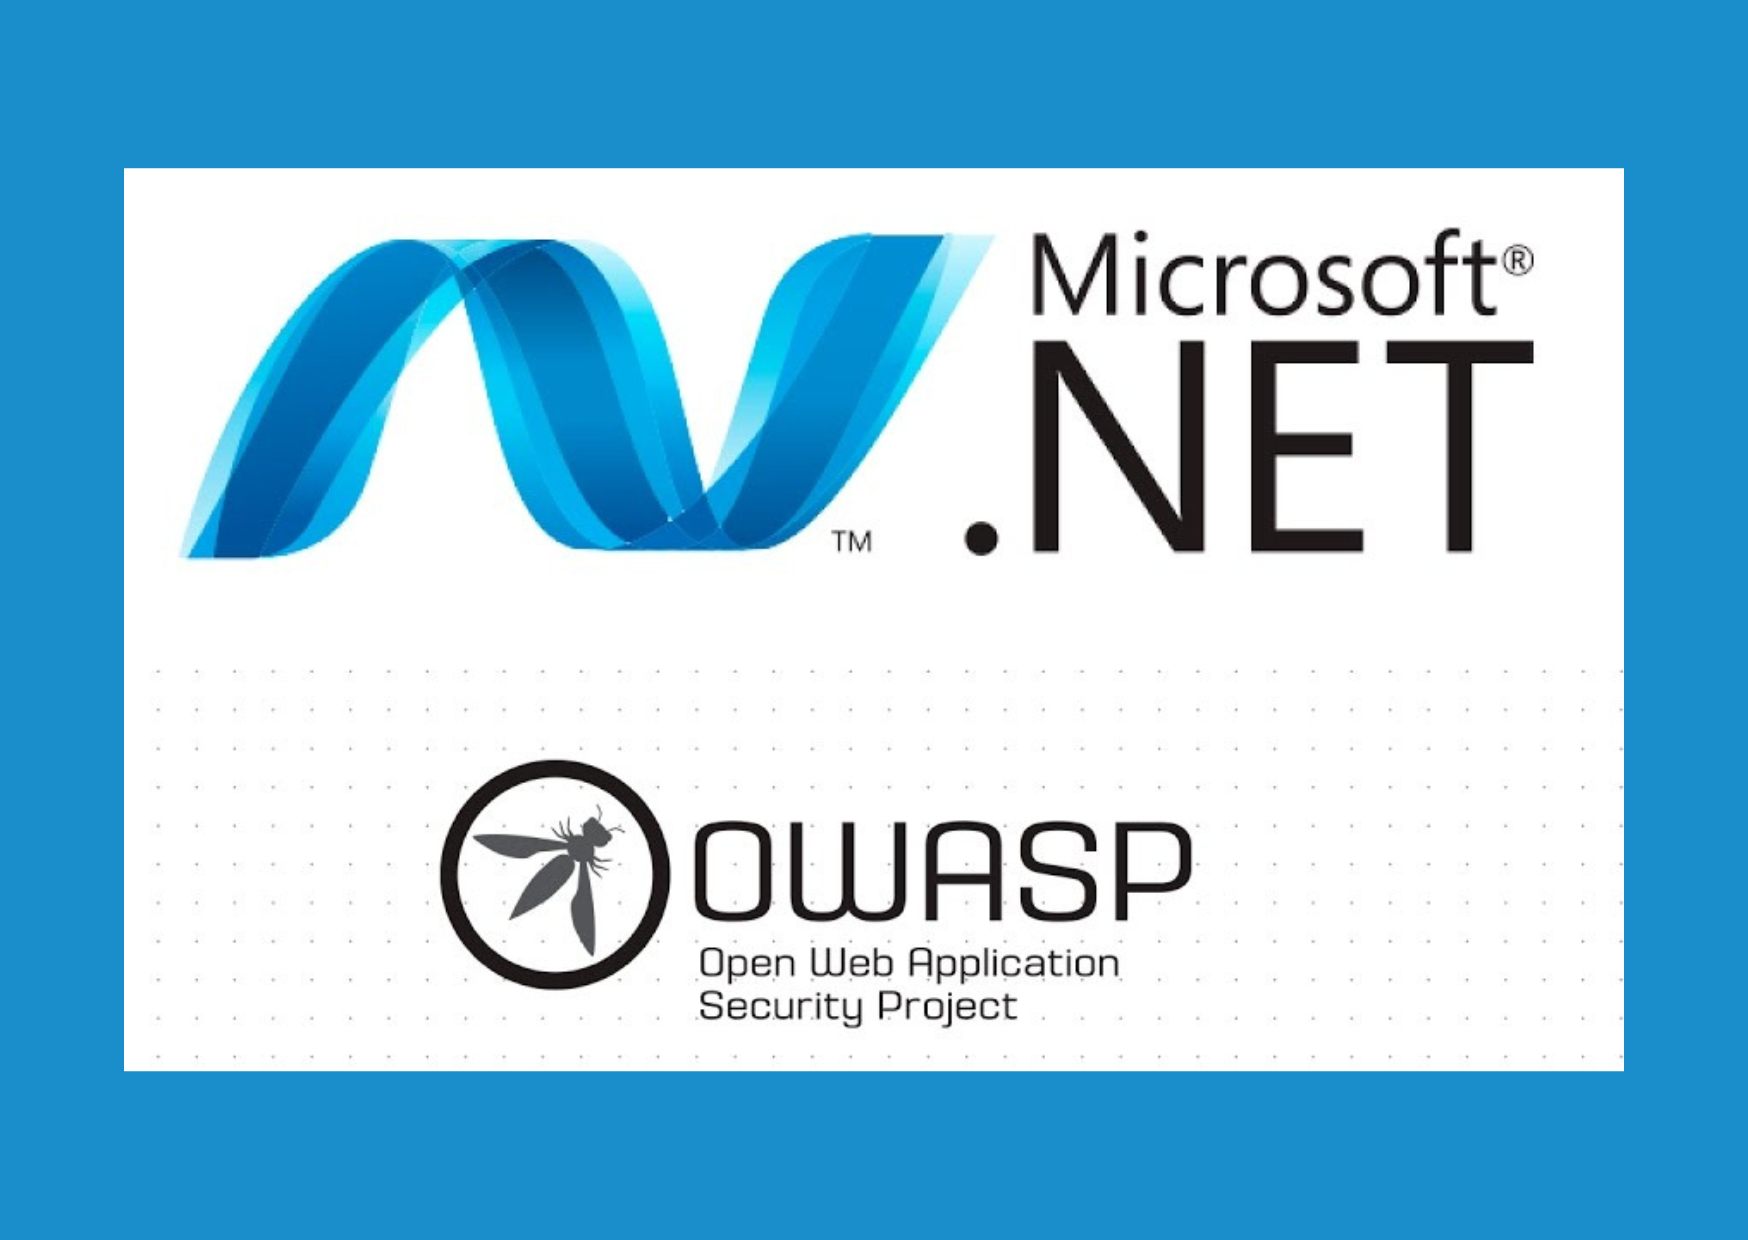 Asp.net web cybersecurity, OWASP TOP 10